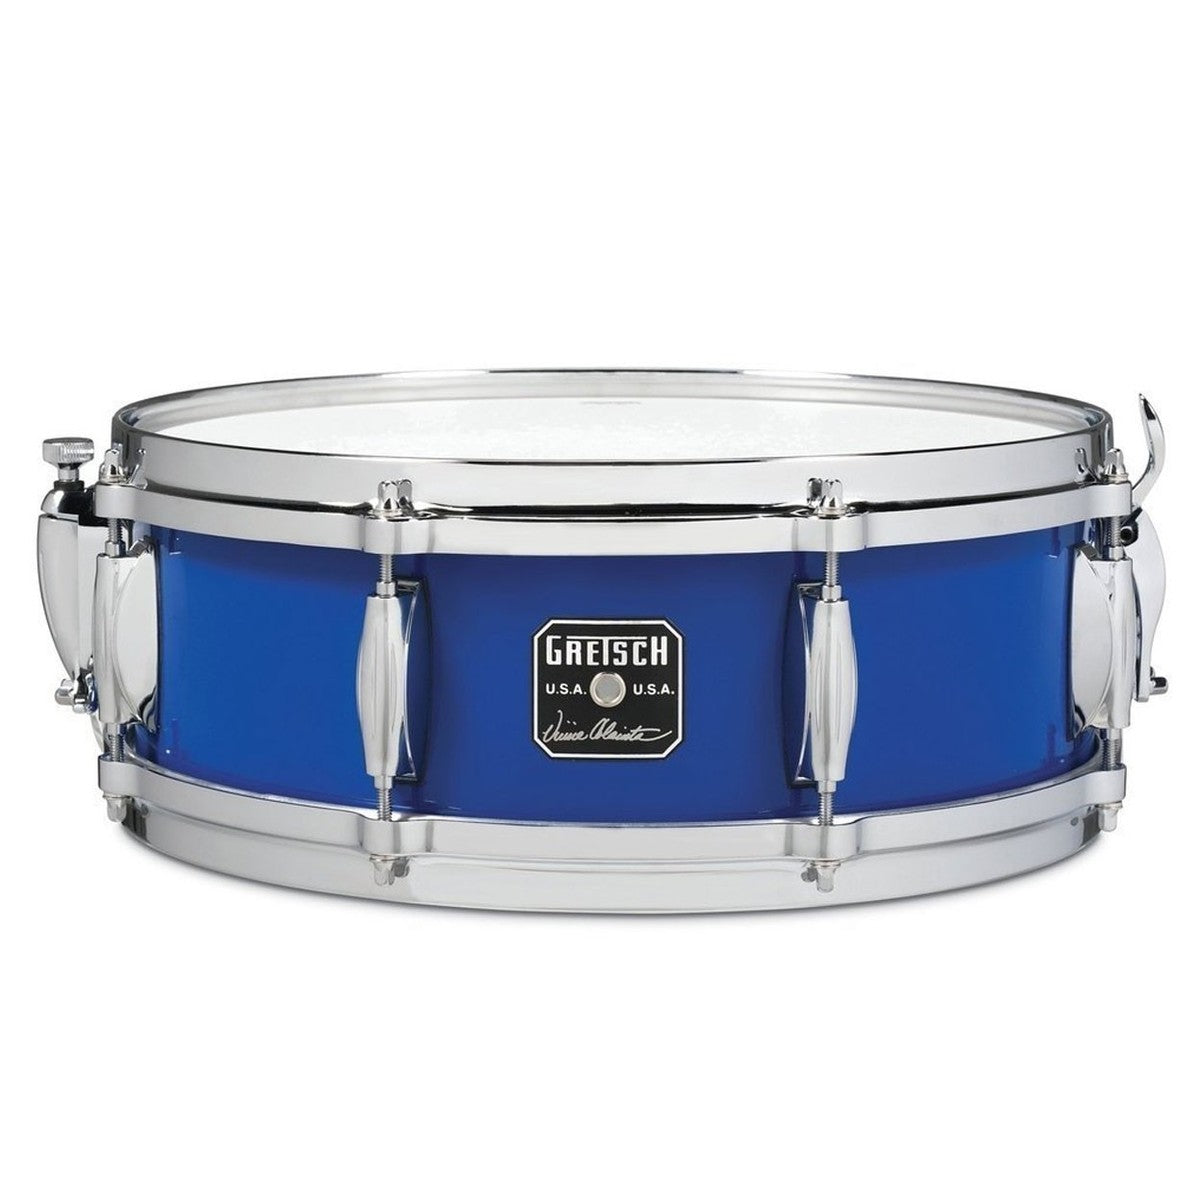 Gretsch USA Vinnie Colaiuta Signature 14"x5" Snare Drum in Cobalt Blue Gloss